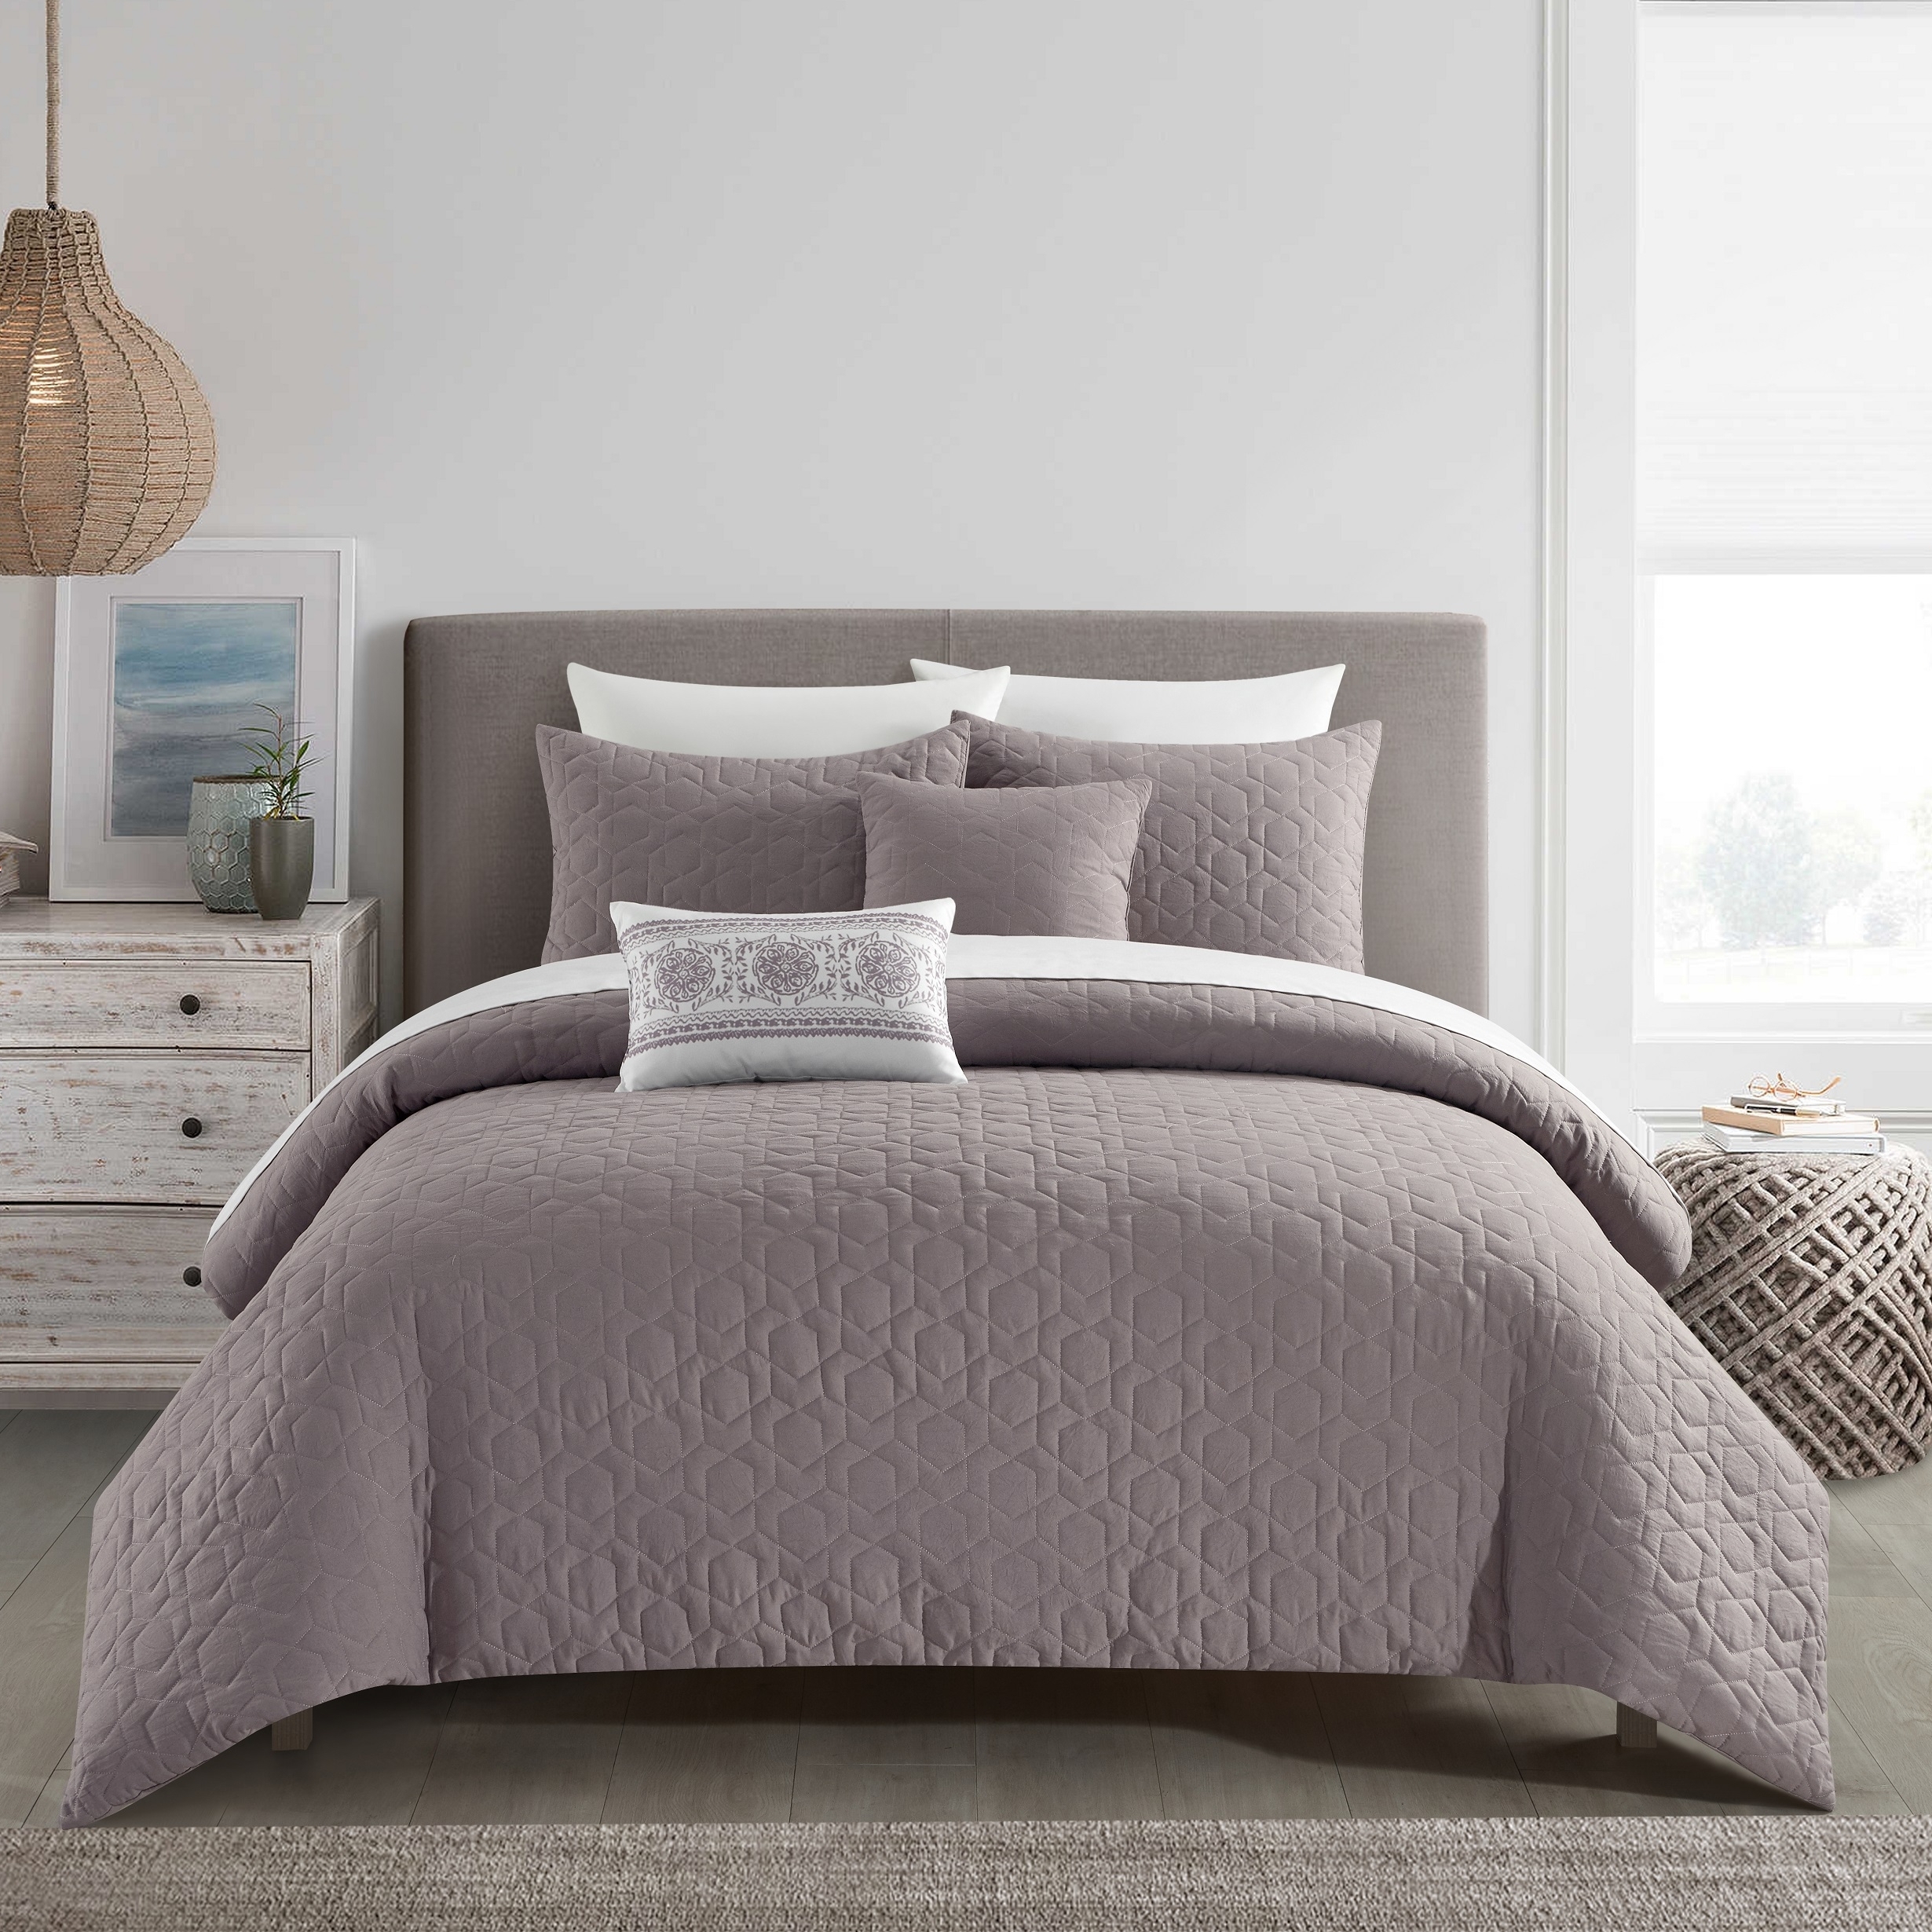 NY&C Home Cavina 5 Piece Comforter Set Geometric Hexagonal Pattern - Grey, Queen